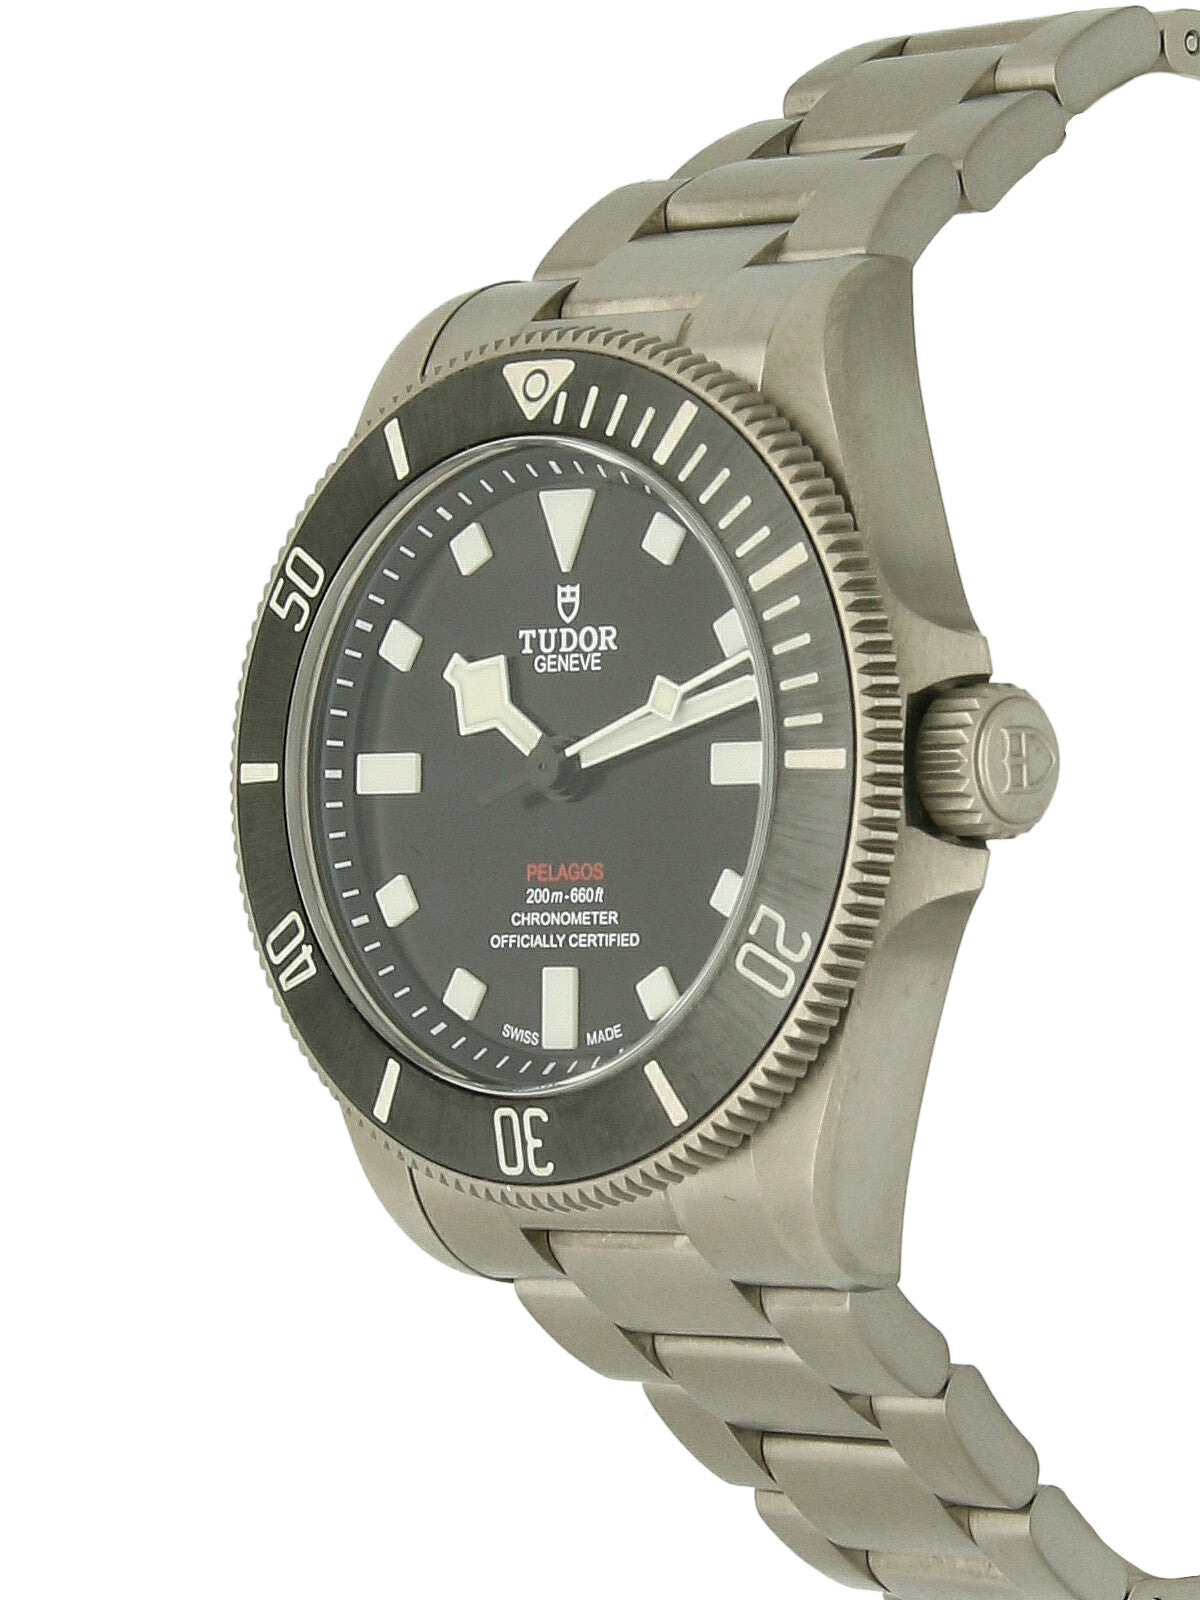 Pre Owned TUDOR Pelagos Titanium Automatic 39mm Watch on Bracelet